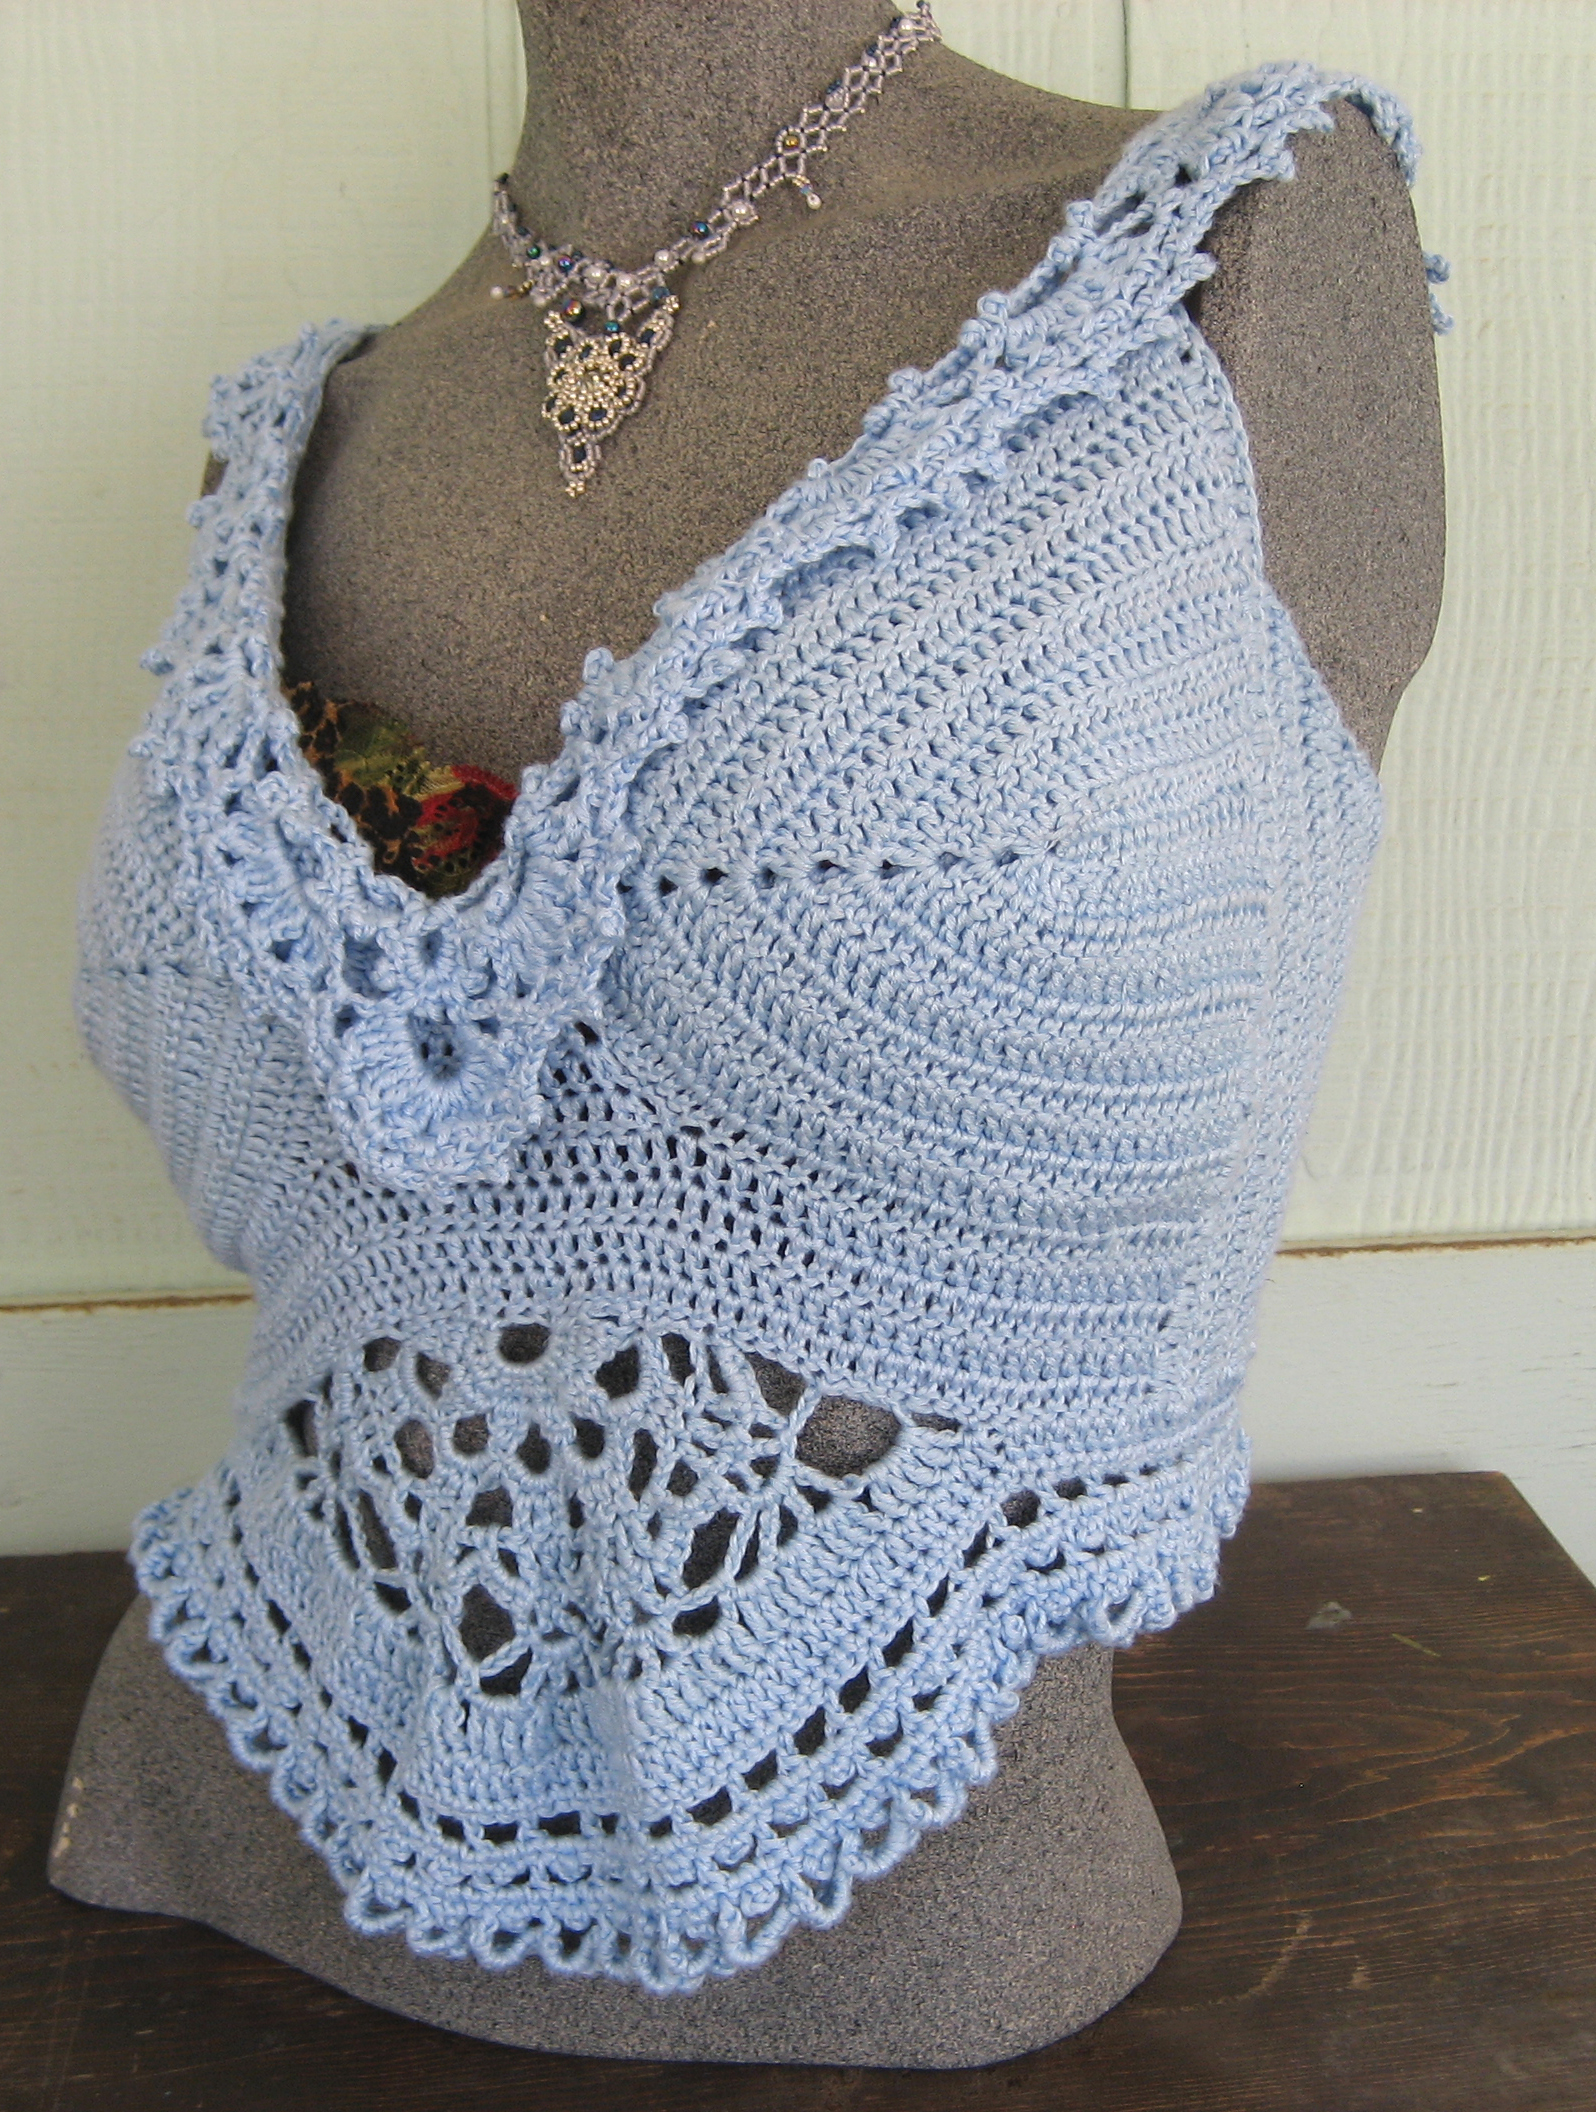 Hand crocheted ice blue snowflake halter top by Bonnie Van Hall